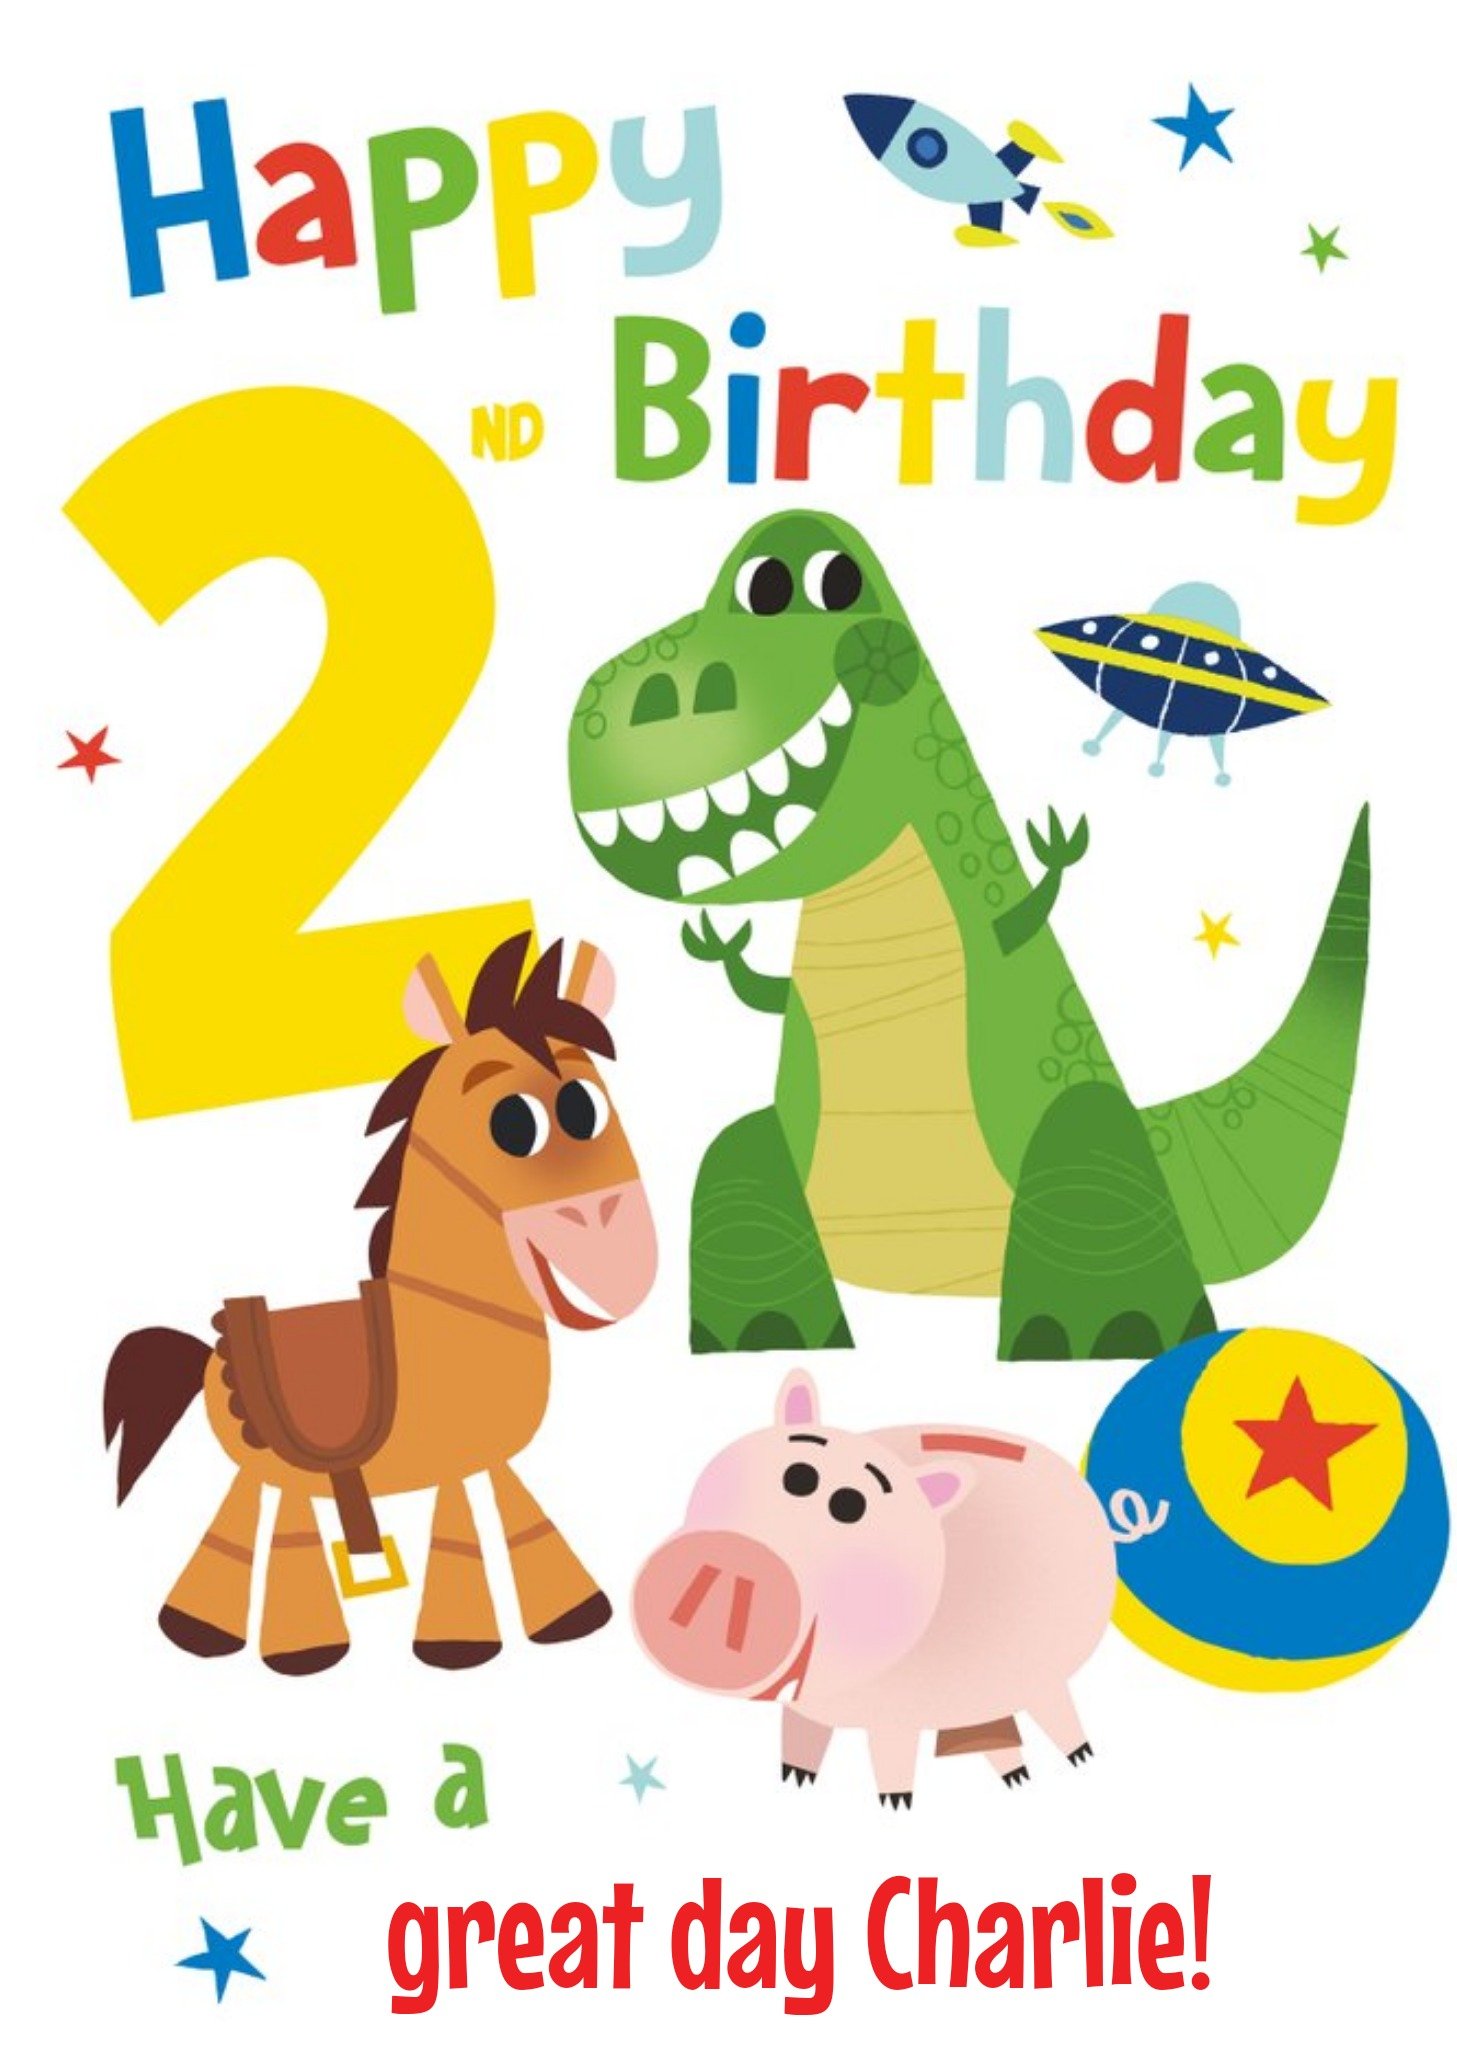 Toy Story Buzz Lightyear Grandson It's Your Birthday Card Ecard